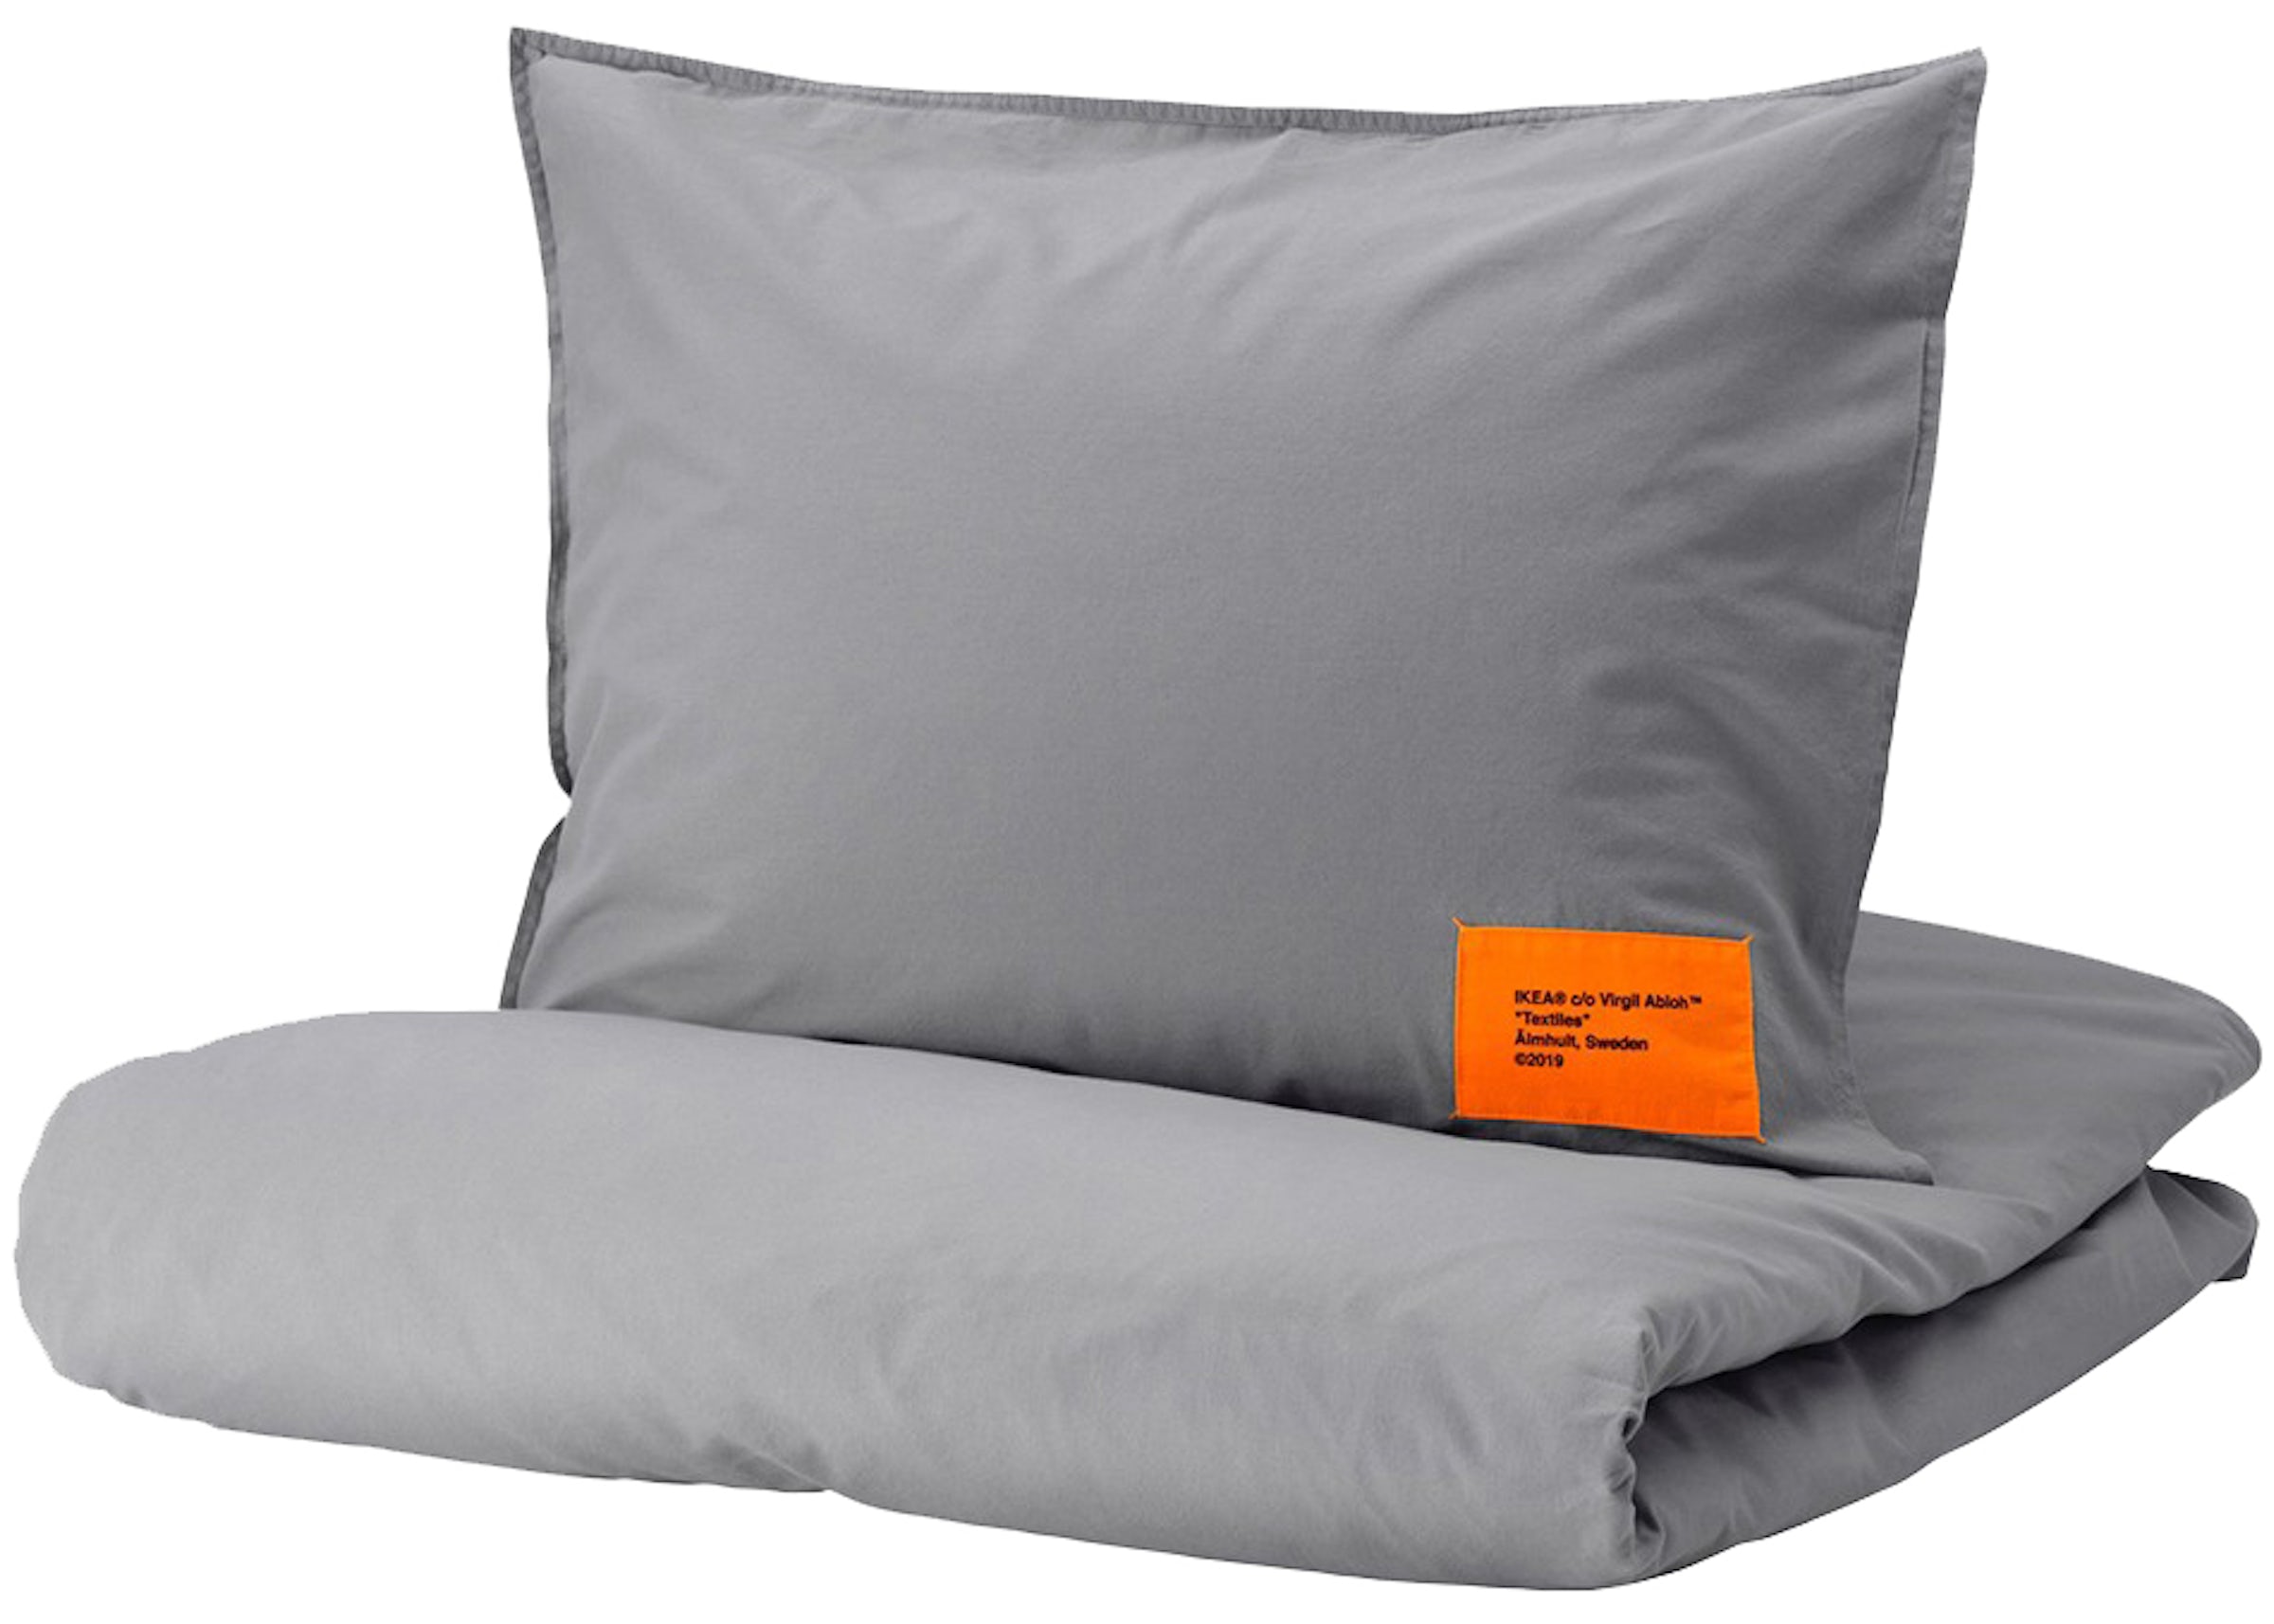 Virgil Abloh x IKEA MARKERAD US Duvet Cover and 2 Pillowcases